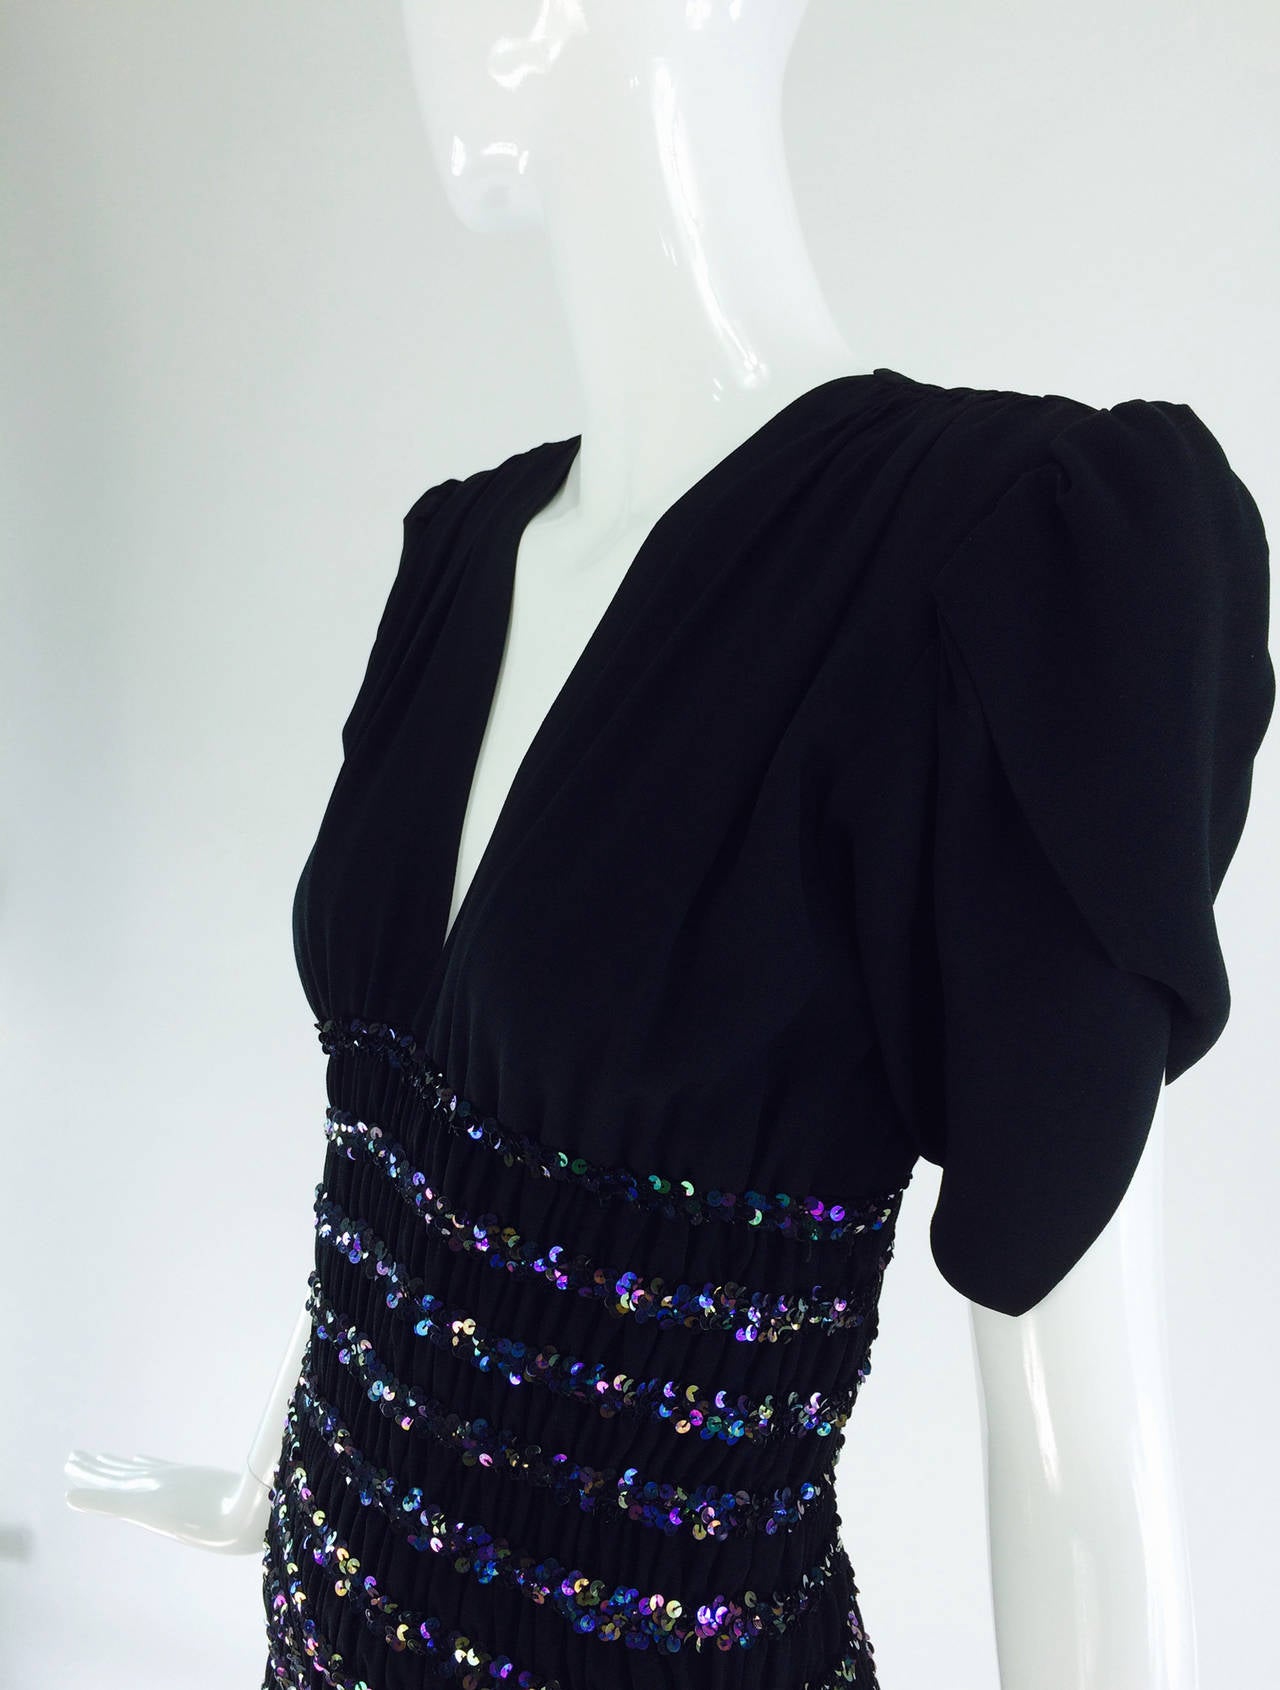 1971 Yves St Laurent Liberation collection black crepe sequin dress 2